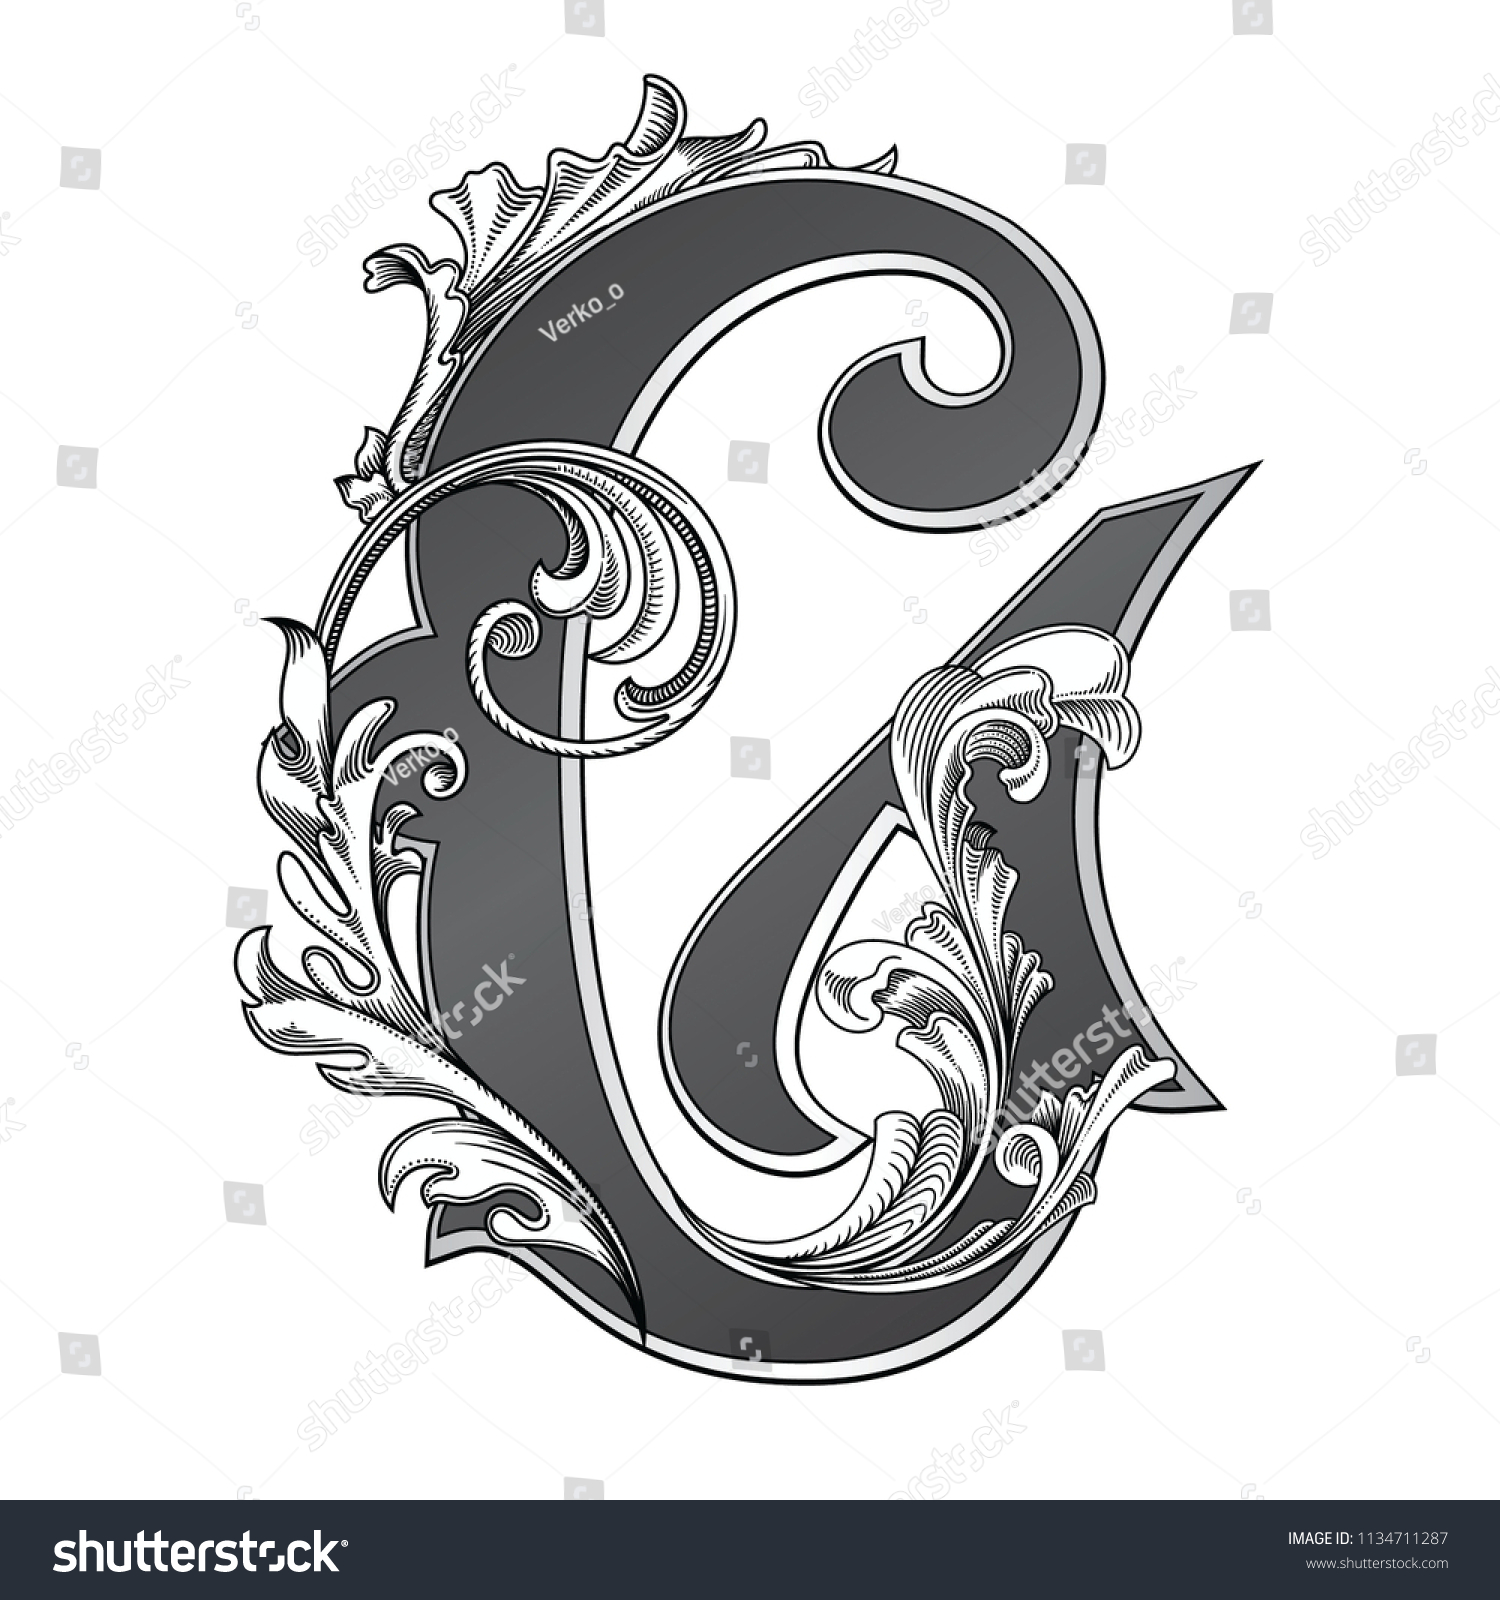 3,526 Ornate letter c Images, Stock Photos & Vectors | Shutterstock